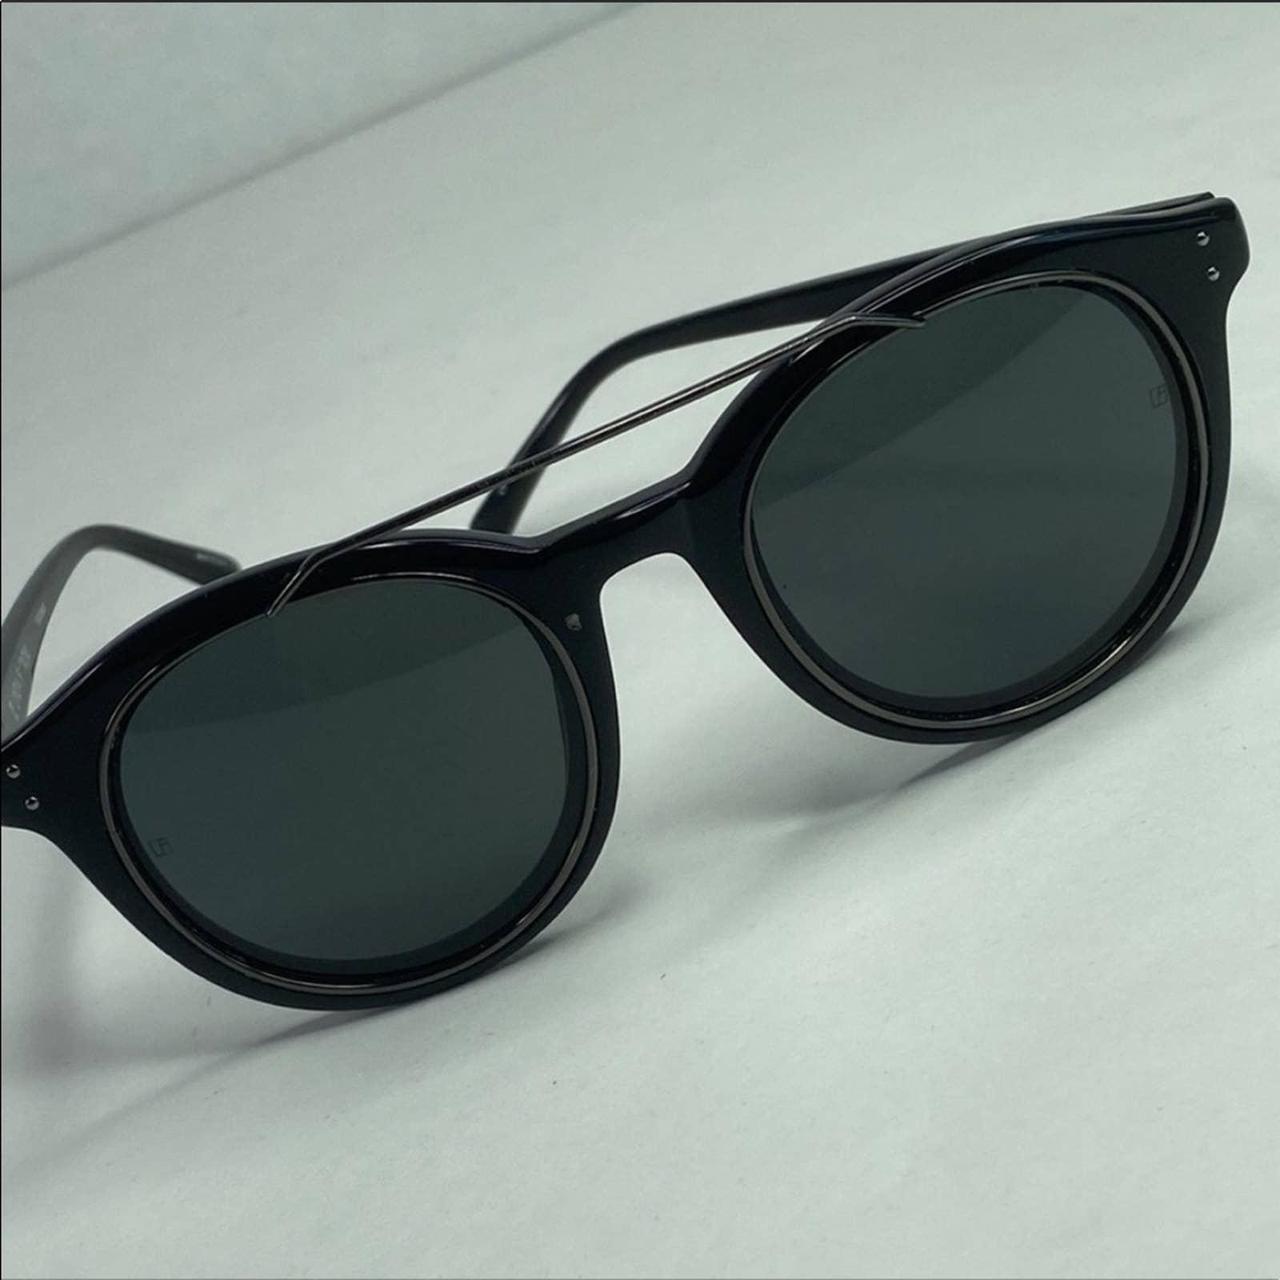 Product Image 1 - Linda farrow black frame sunglasses
Has